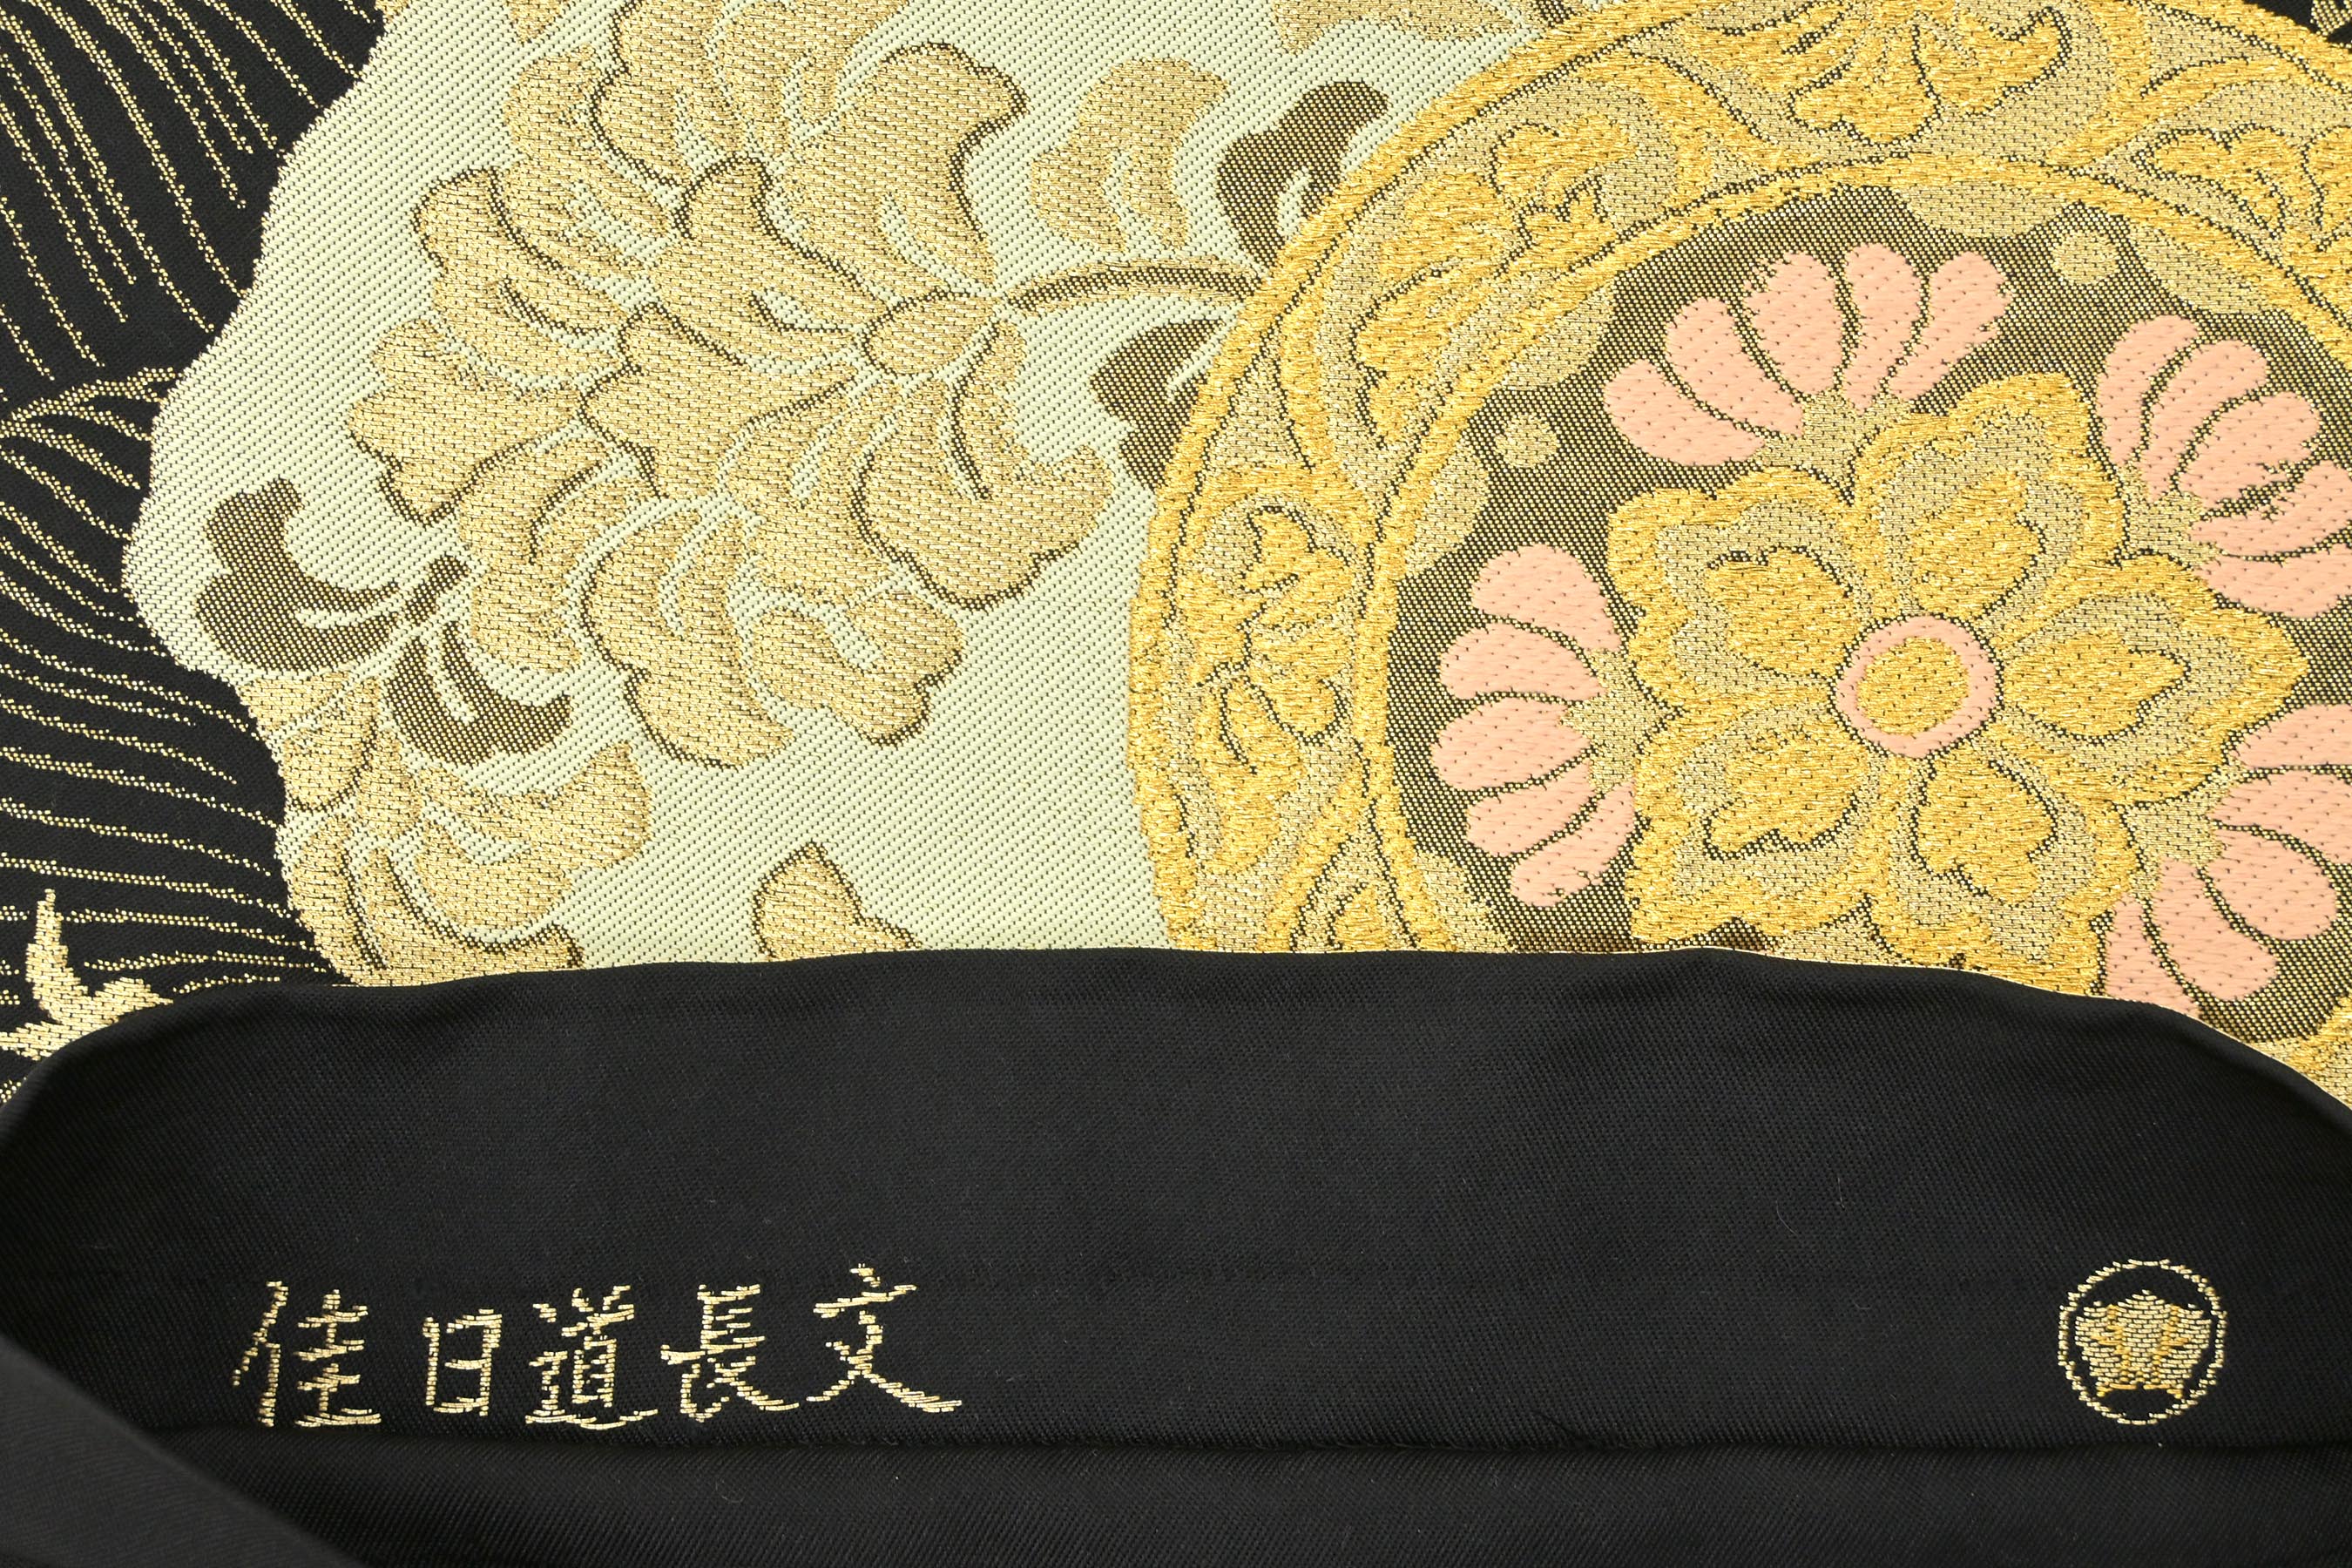 C718京都北尾織物匠豪華西陣正絹帯刺繍サンプル材料プラチナ箔本格的帯地壁掛ハンドメイド